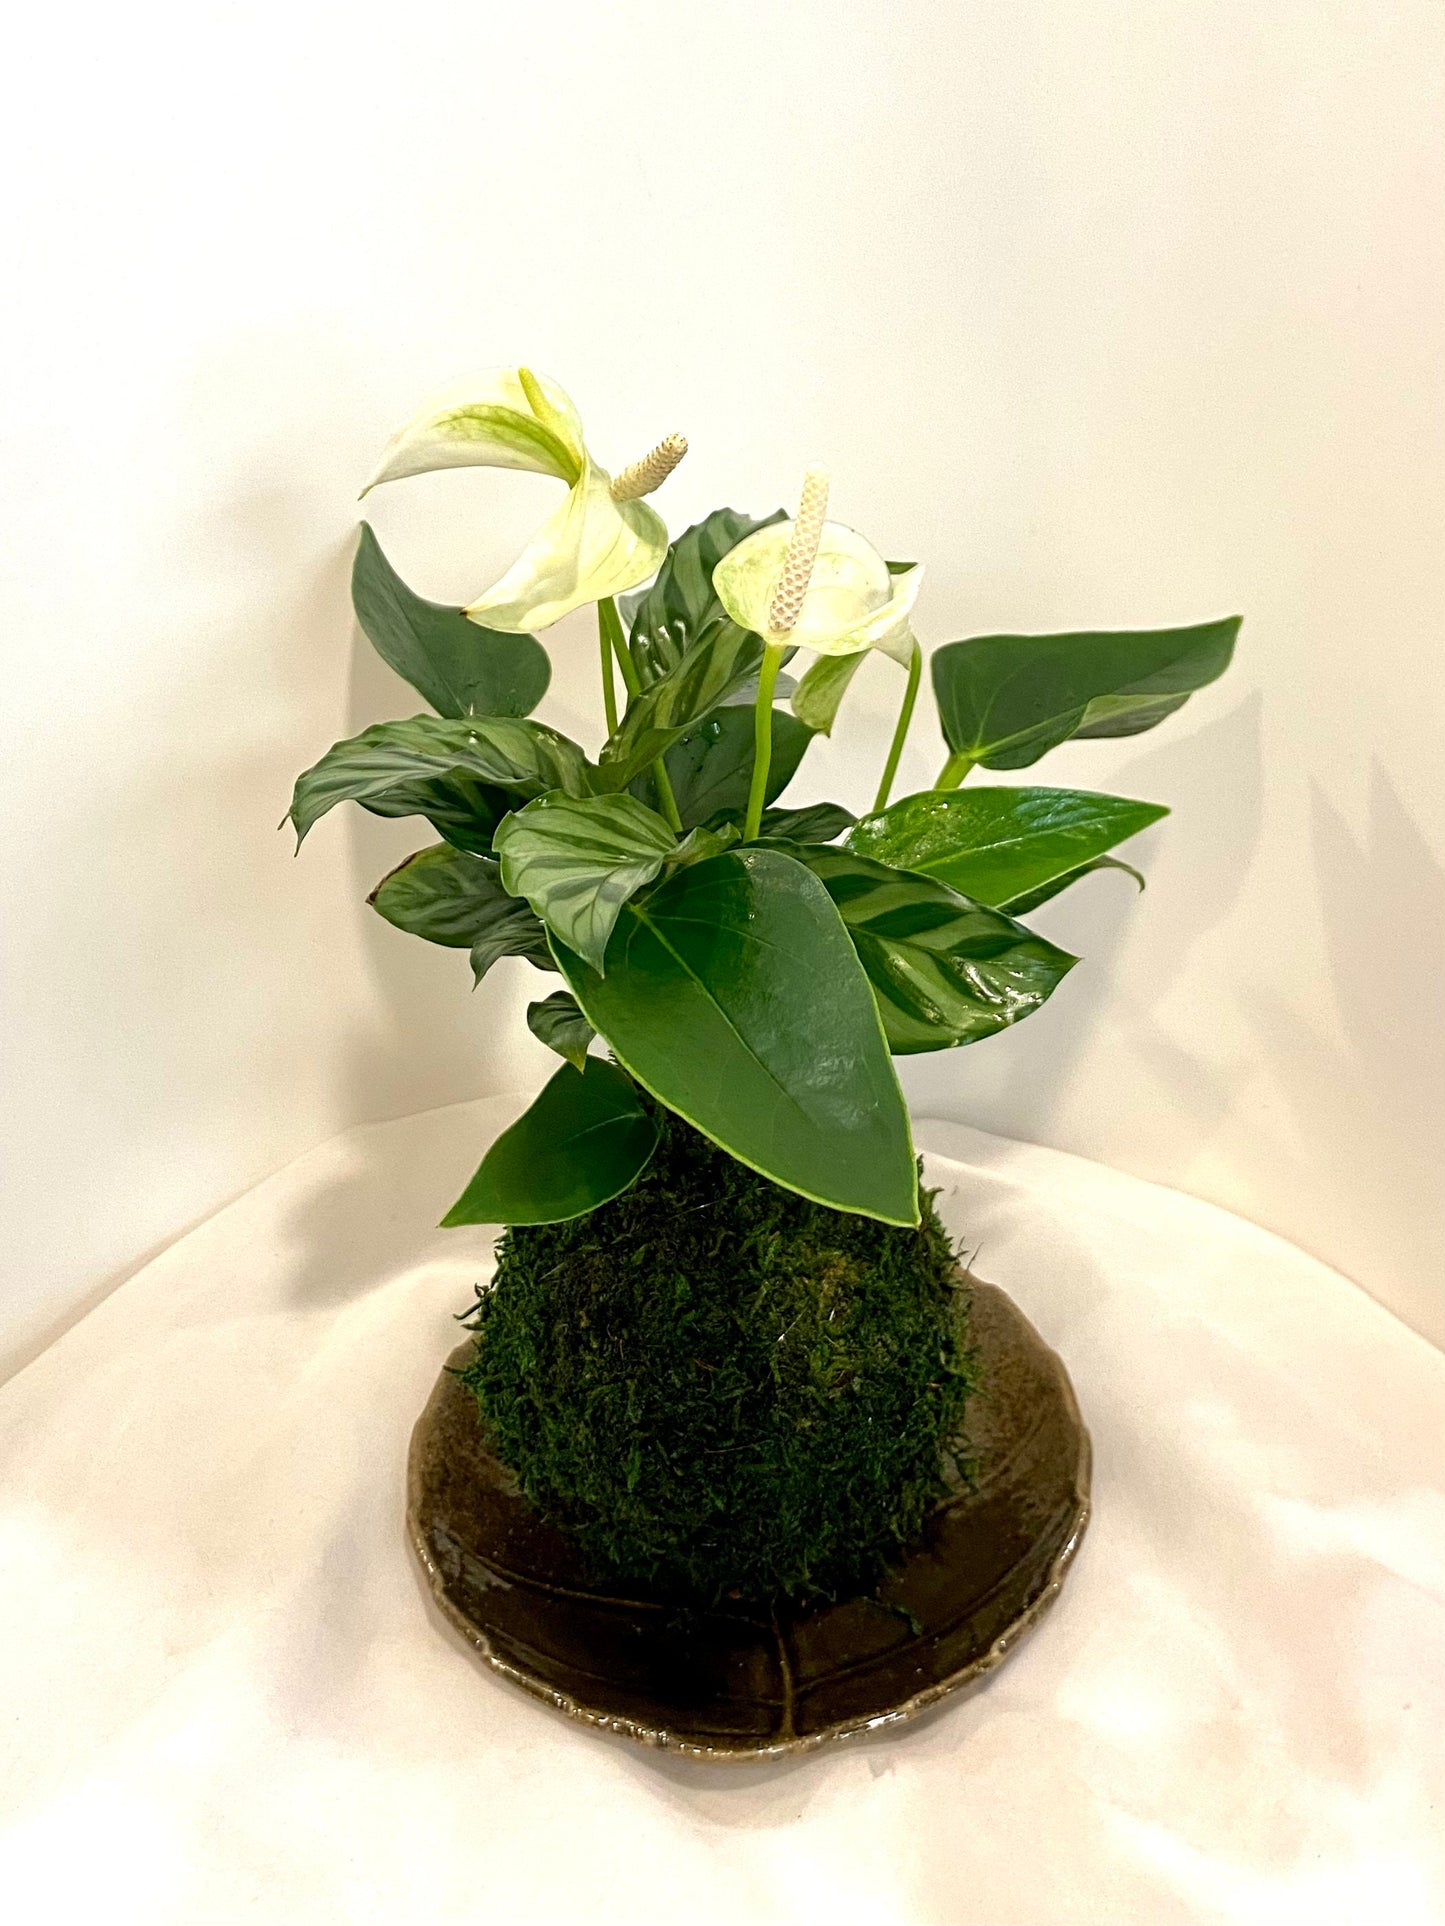 Anthurium and Calathea kokedama -- Bonsai Moss ball -  house decor with Japanese technique plants!